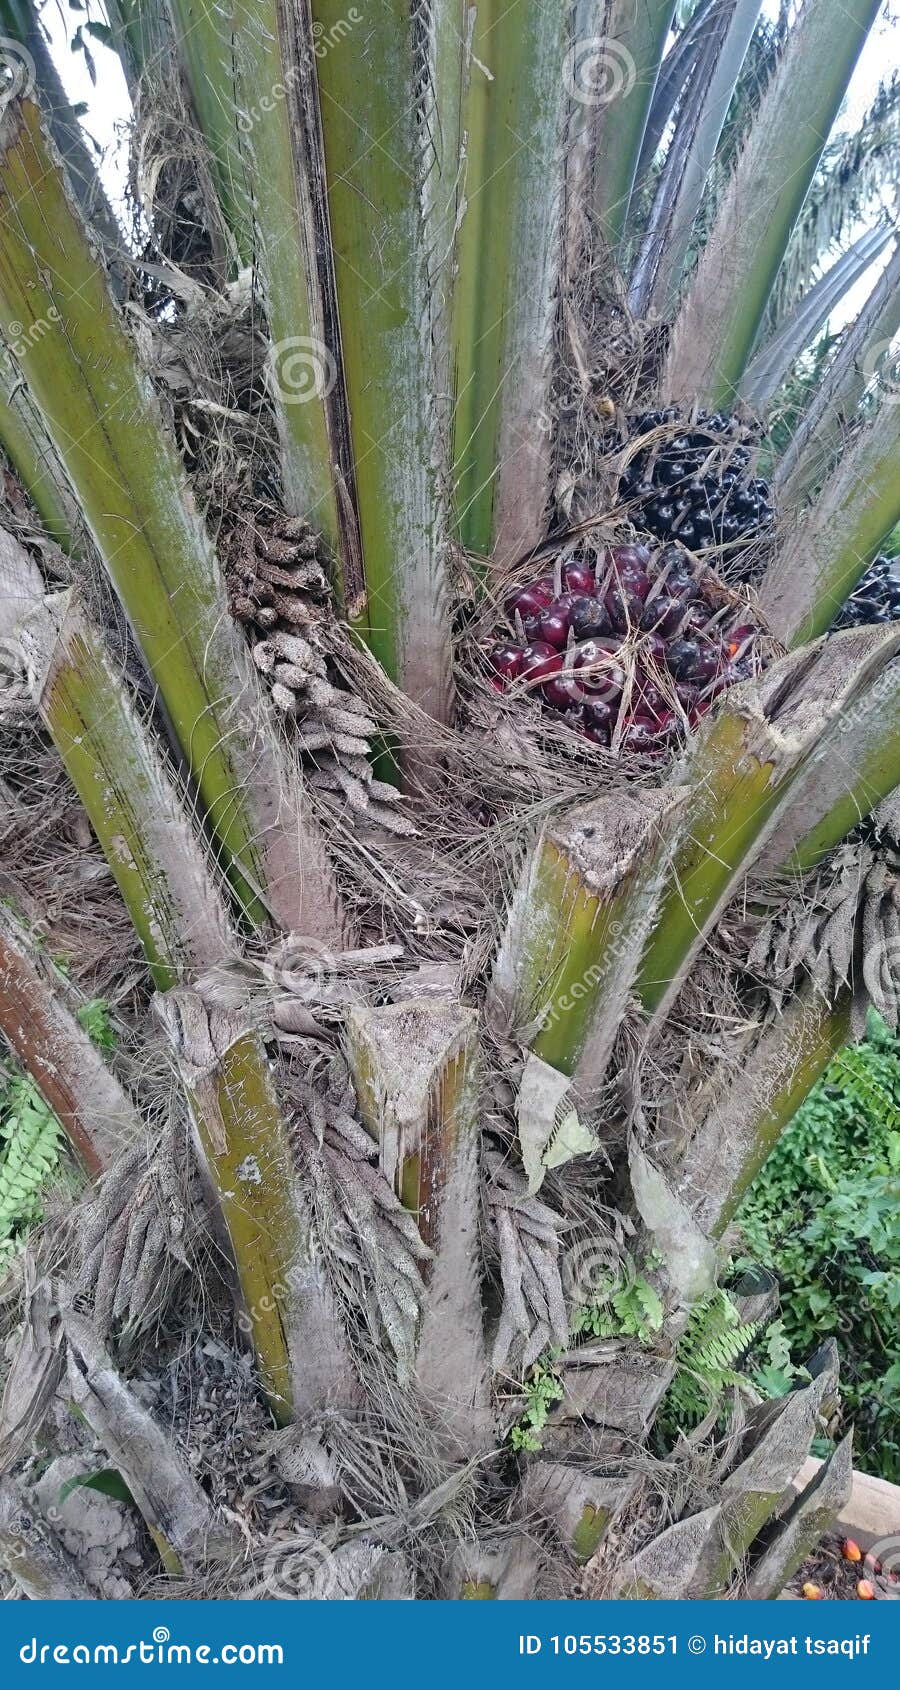 oil palm plants from kalimantan